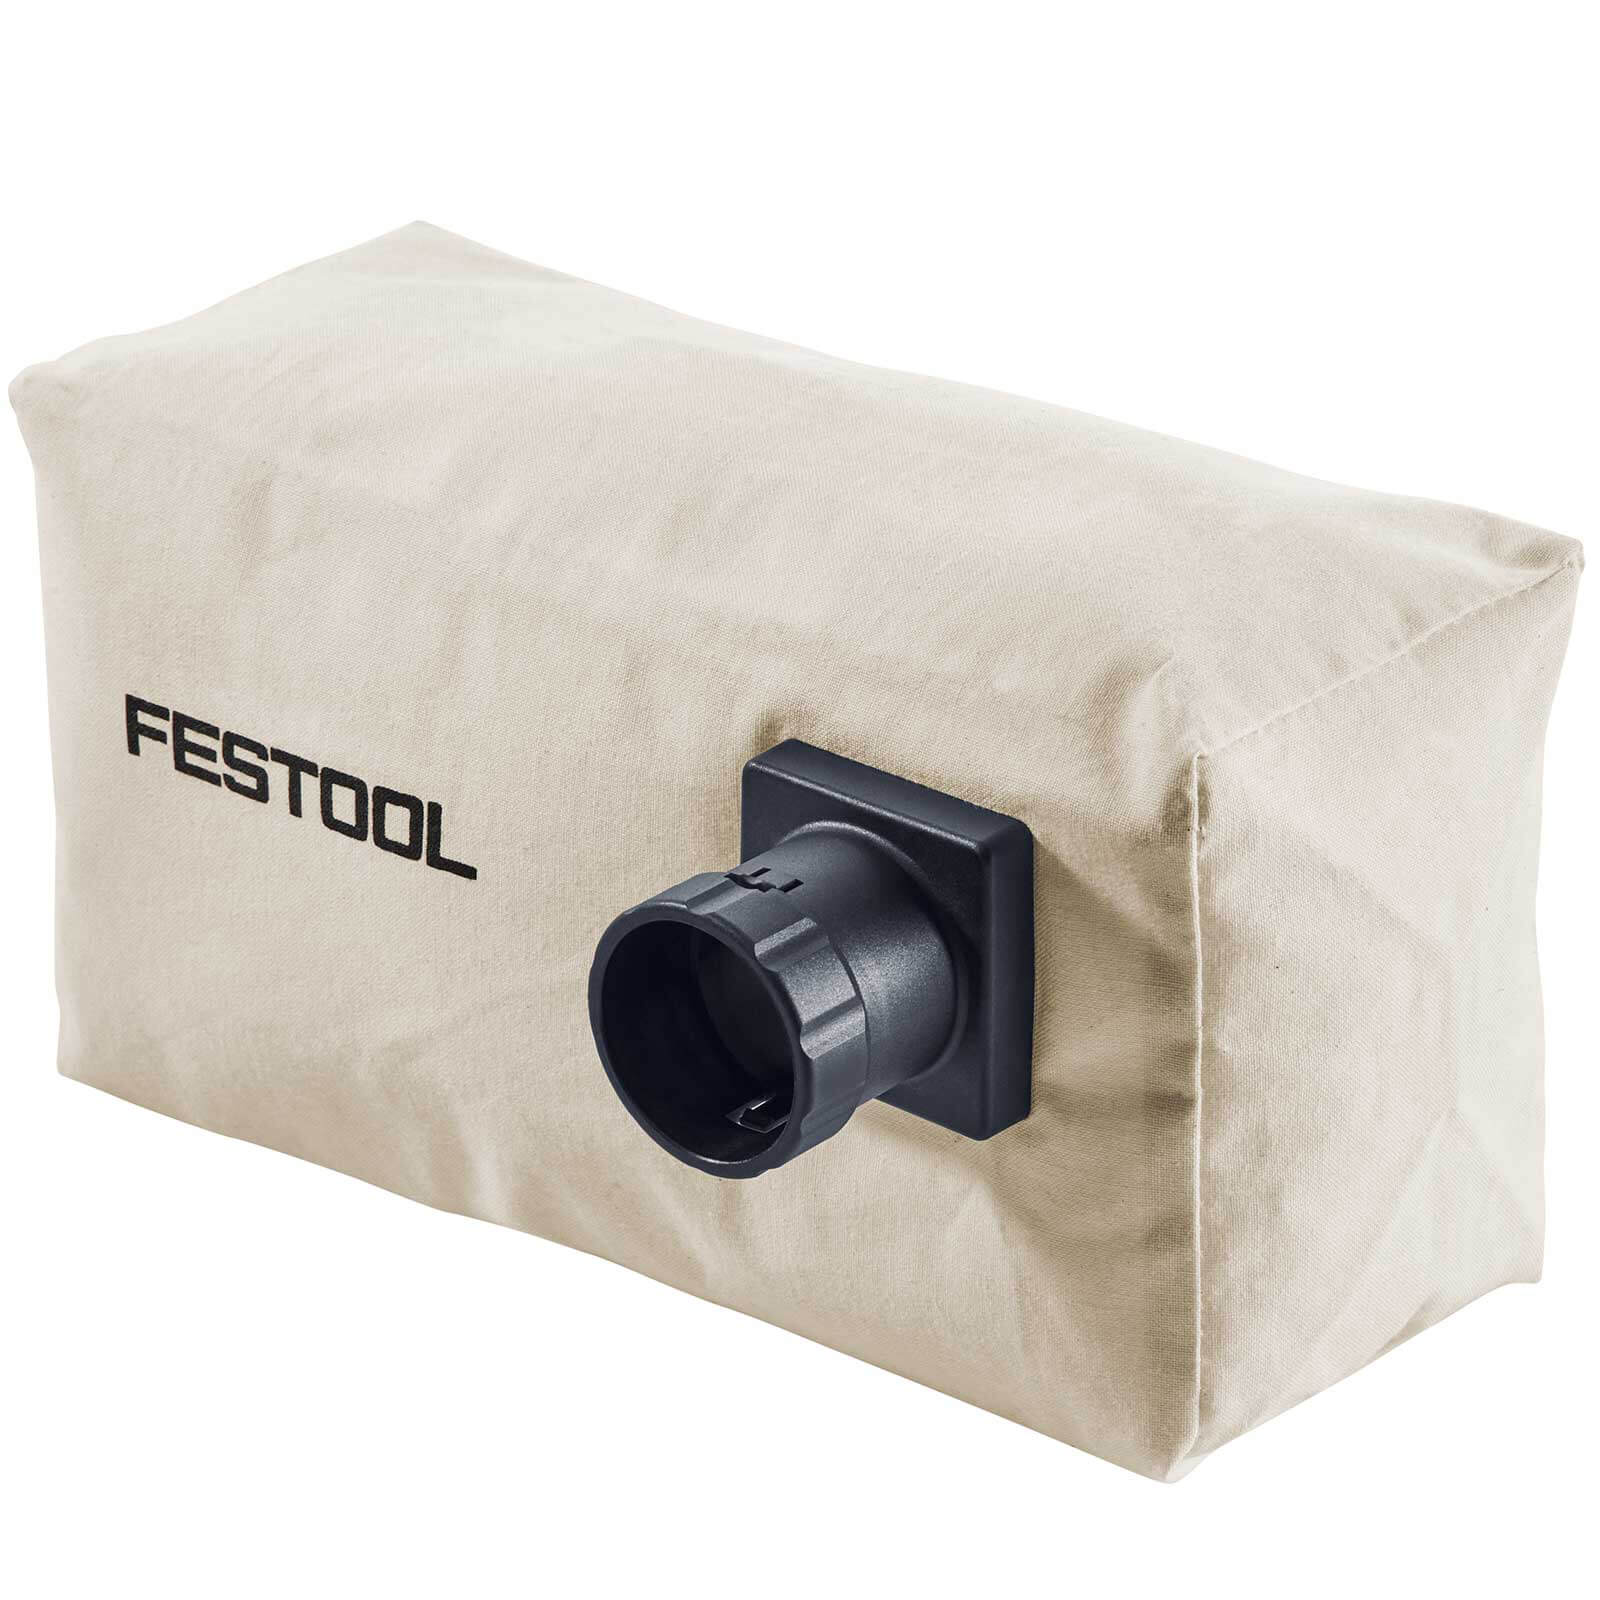 Image of Festool EHL 65 Planer Dust Bag